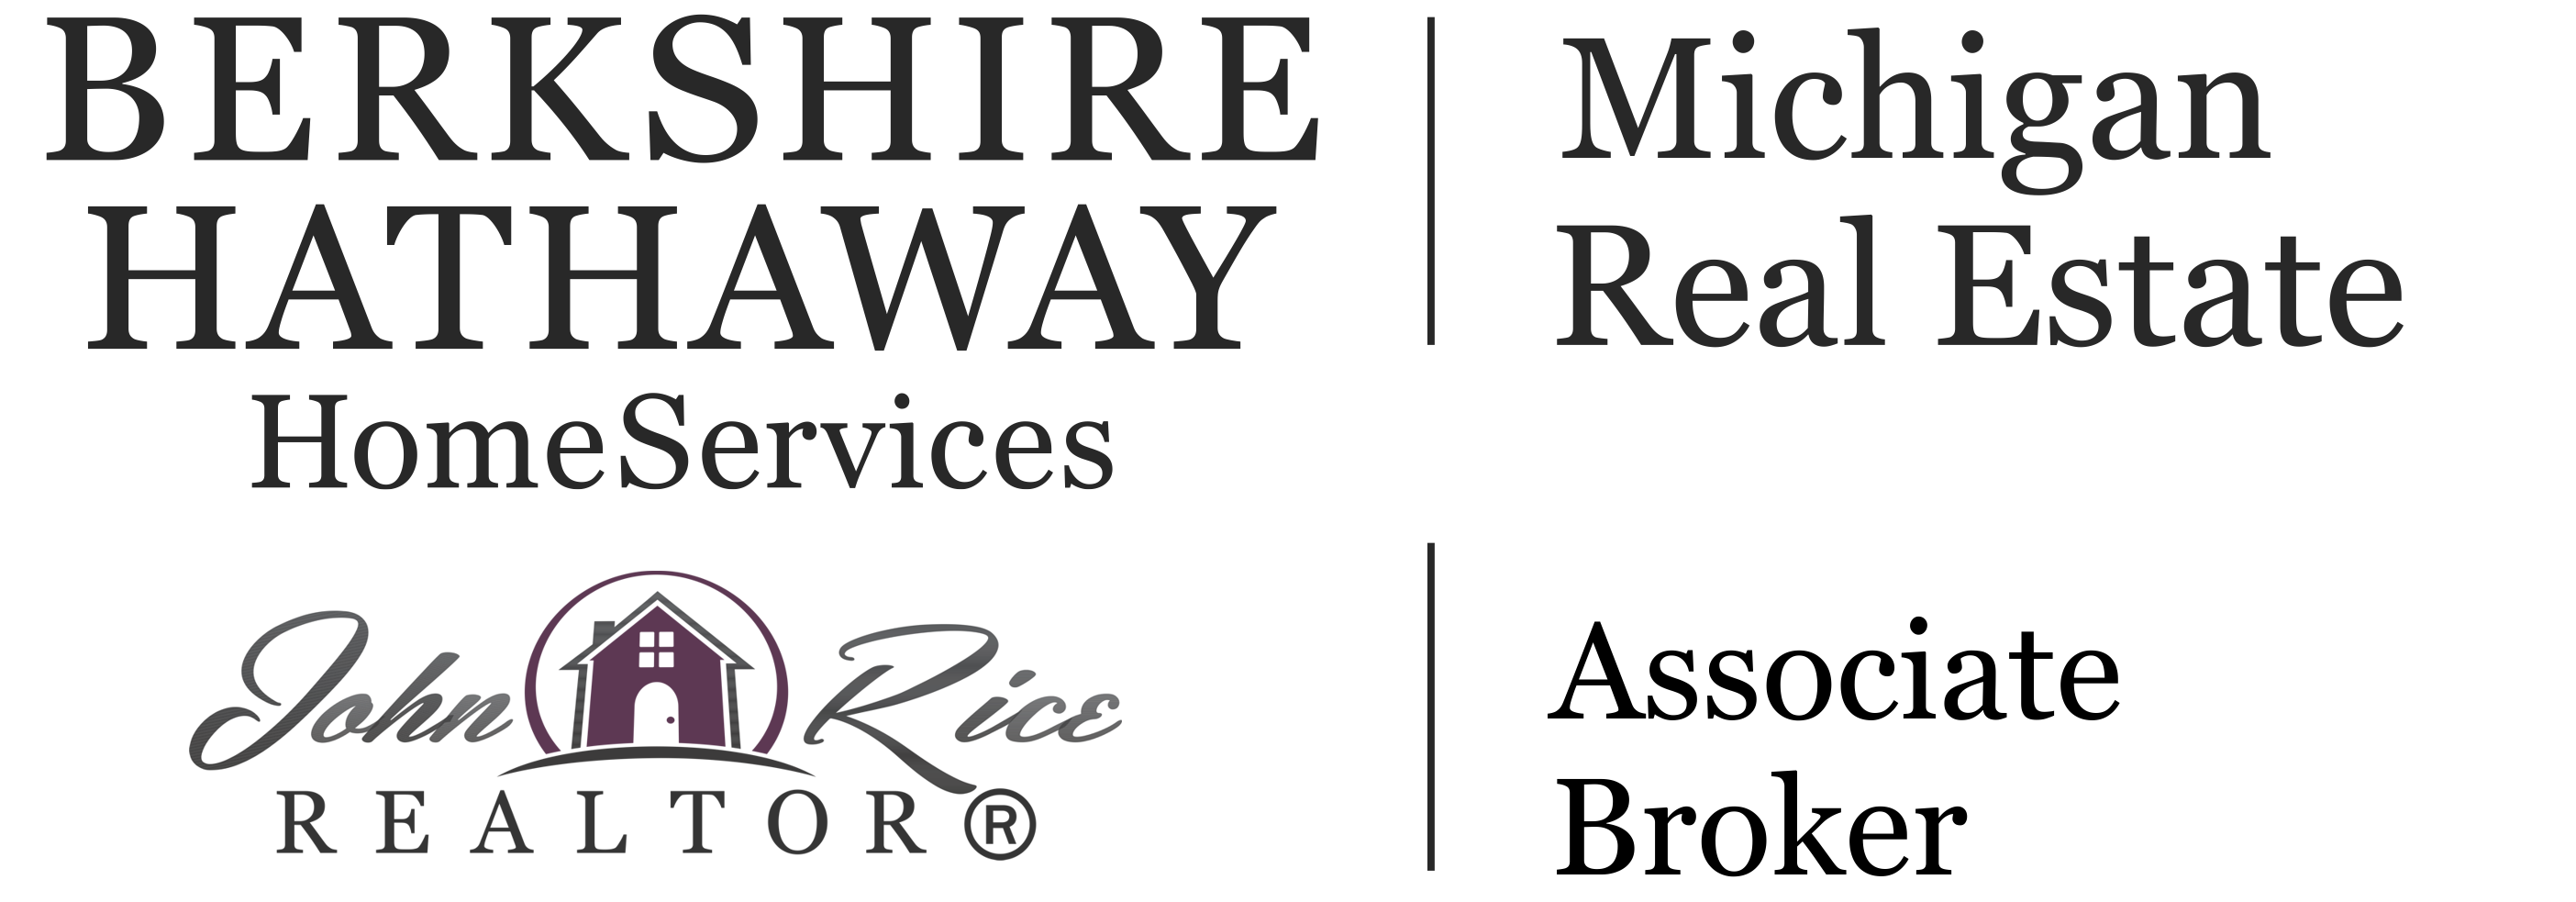 John Rice REALTOR Berkshire Hathaway HomeServices Michigan Real Estate